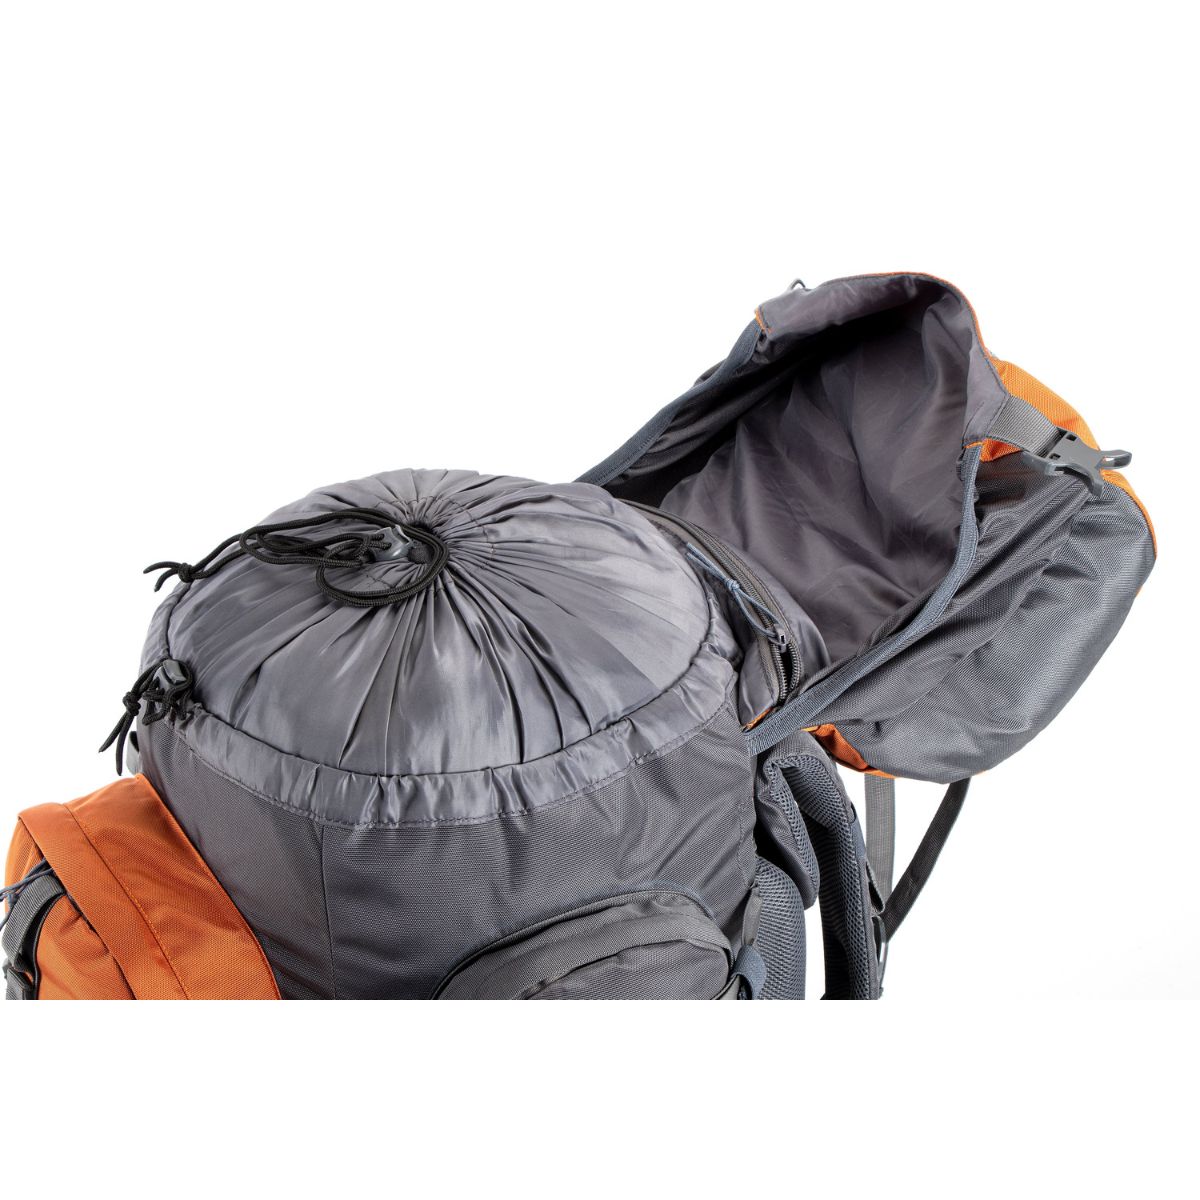 Walker Trekking and Backpacking Rucksack - 65 Litre - Grey & Orange 10